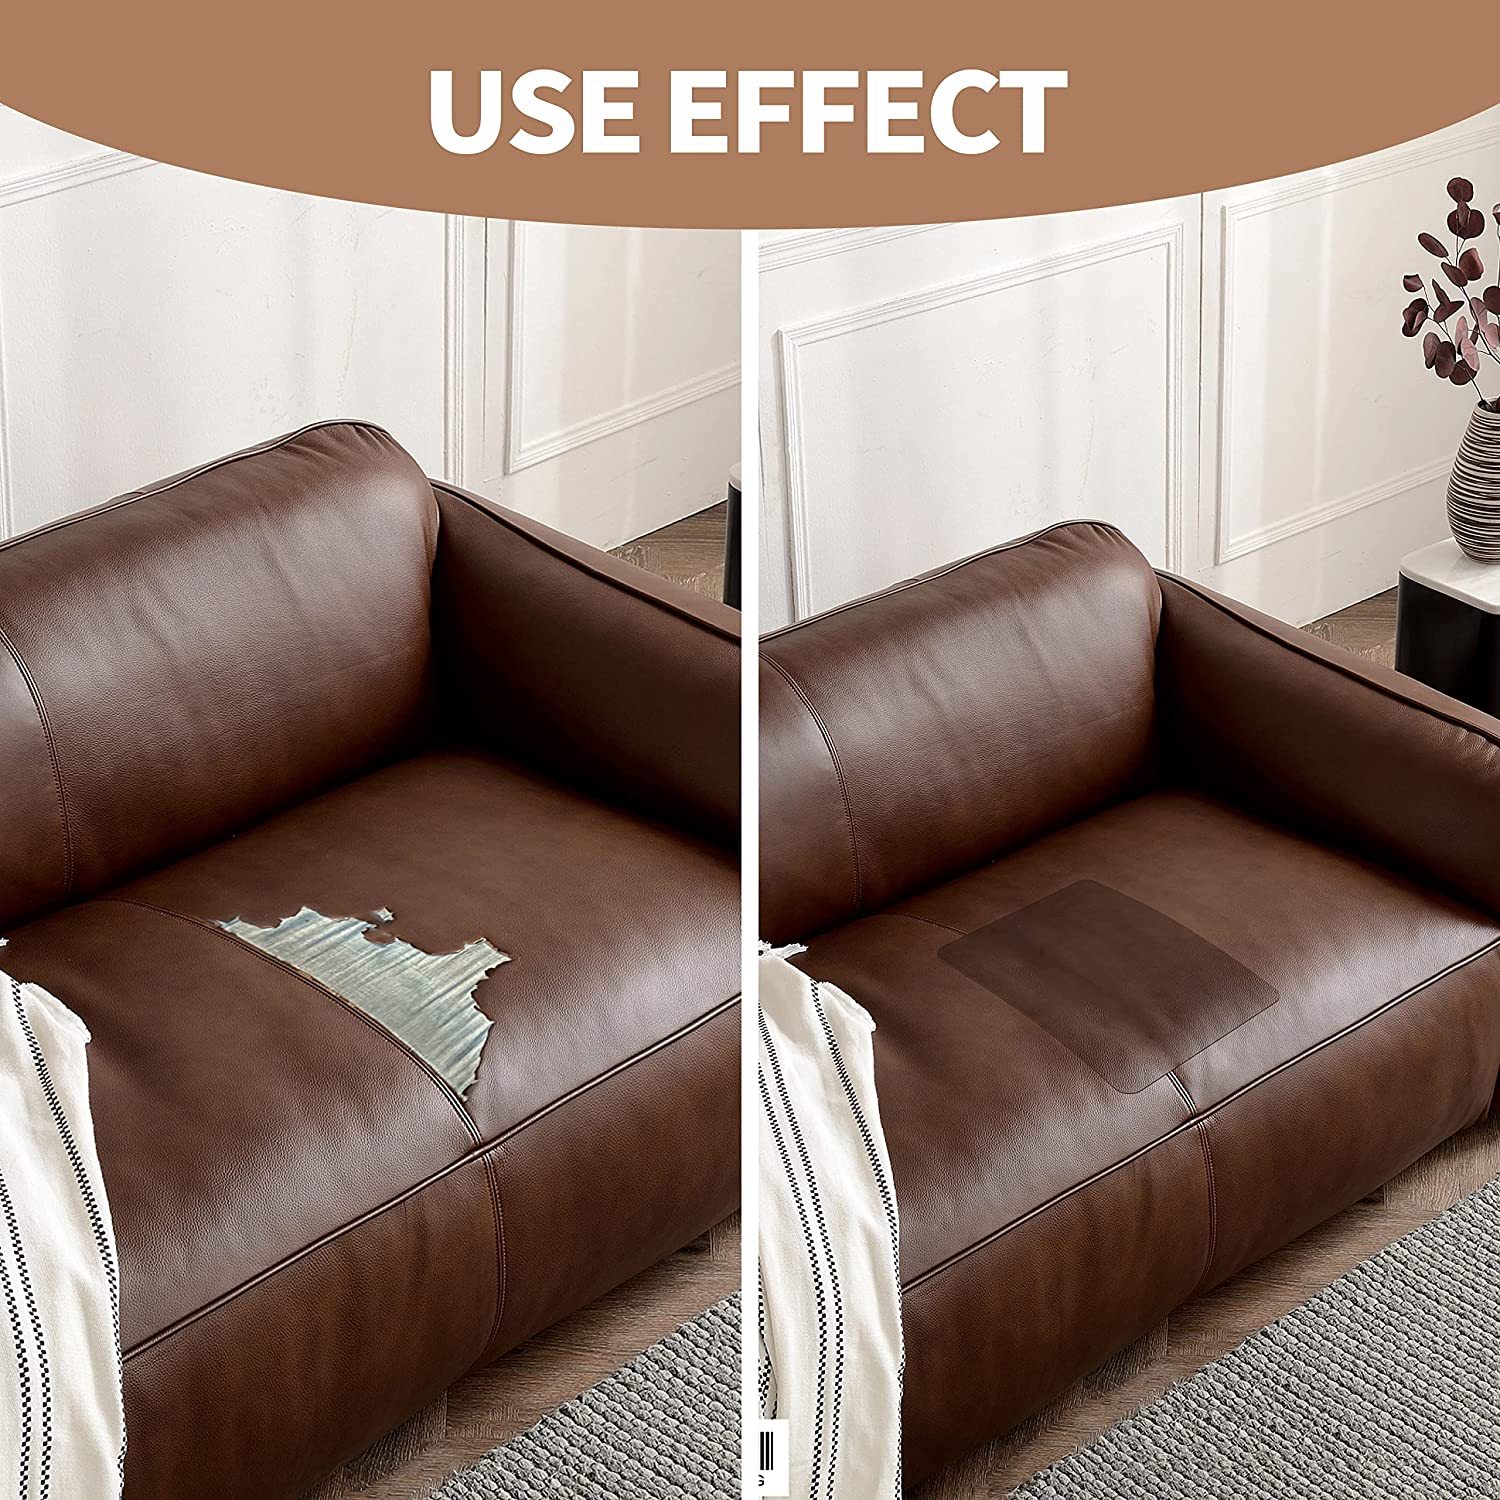 Self-Adhesive Leather Refinisher Cuttable Sofa Repair